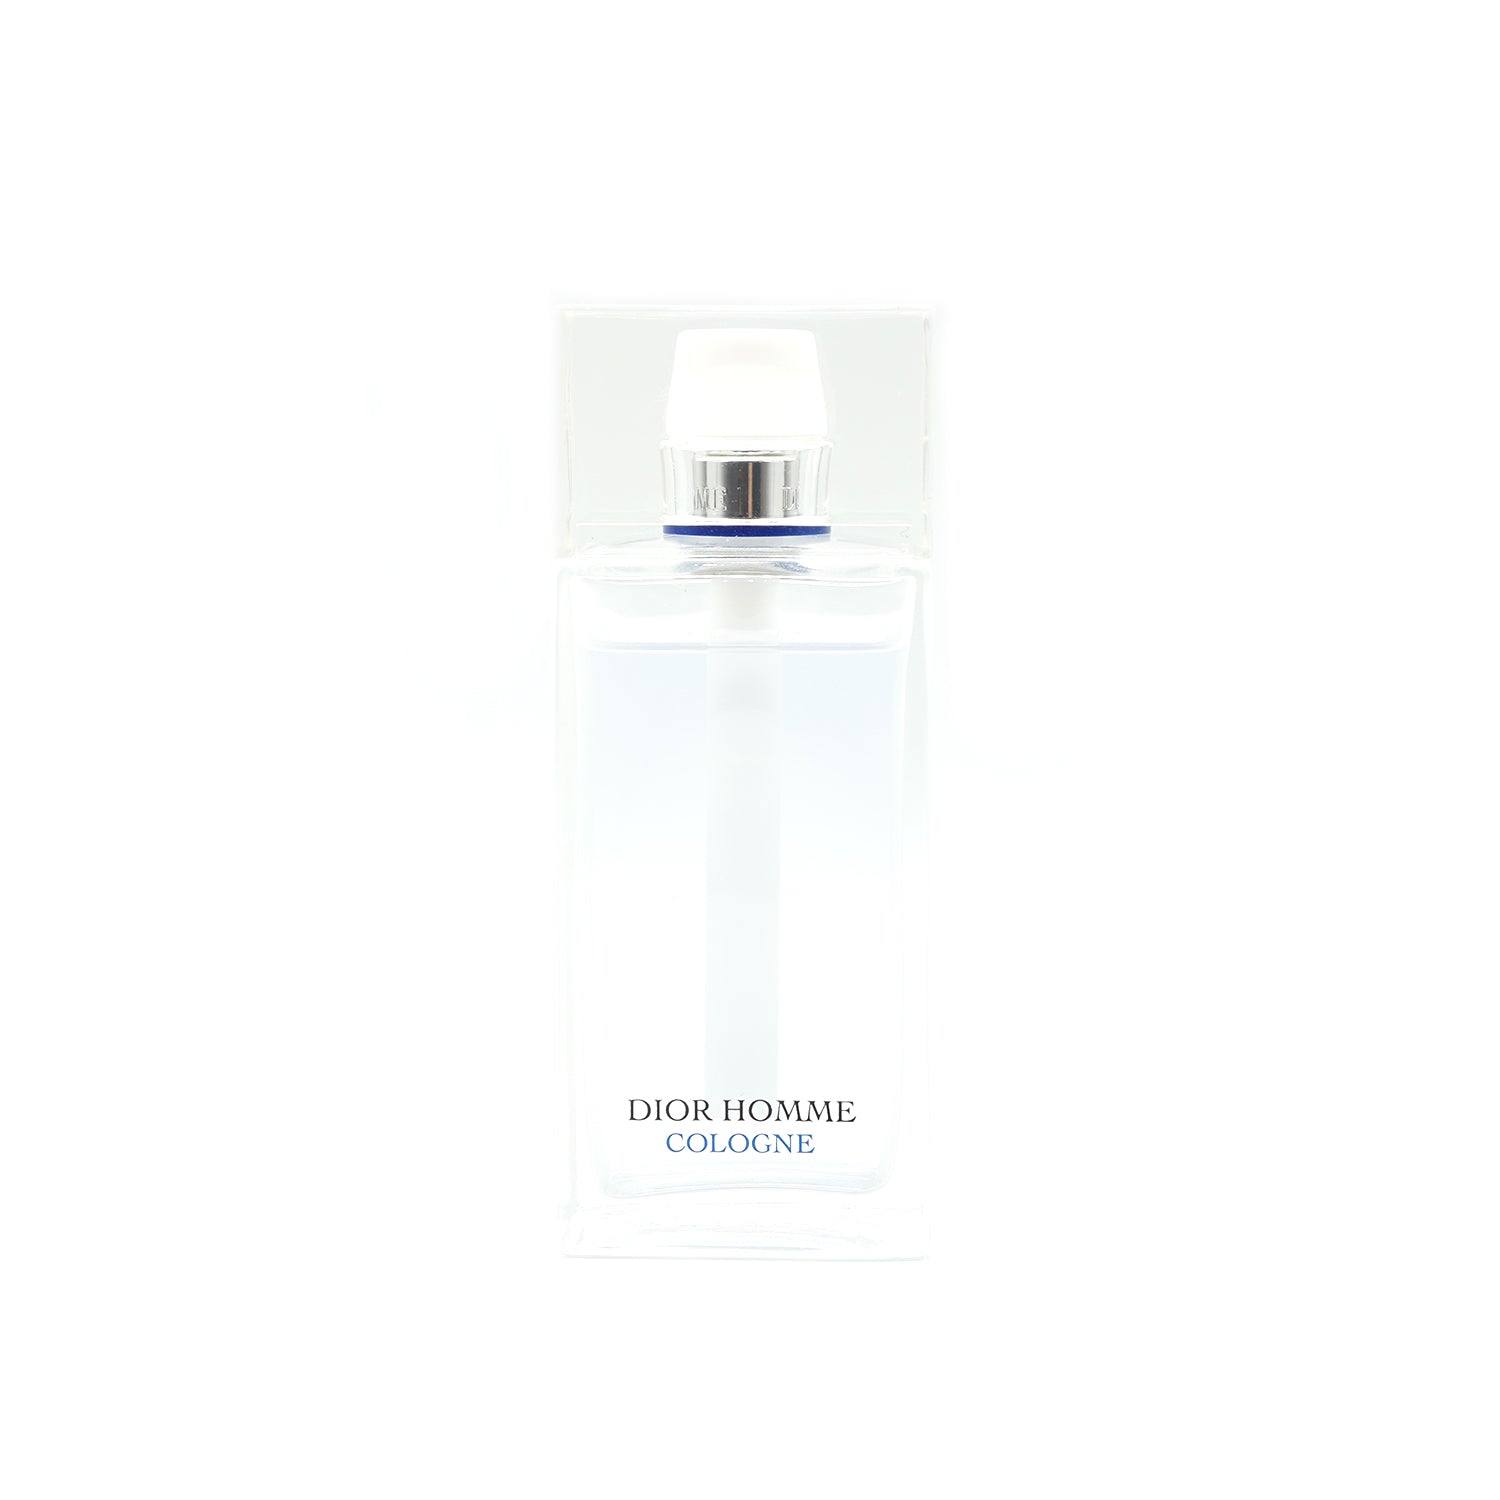 Dior | Homme Cologne Abfüllung-Parfümproben